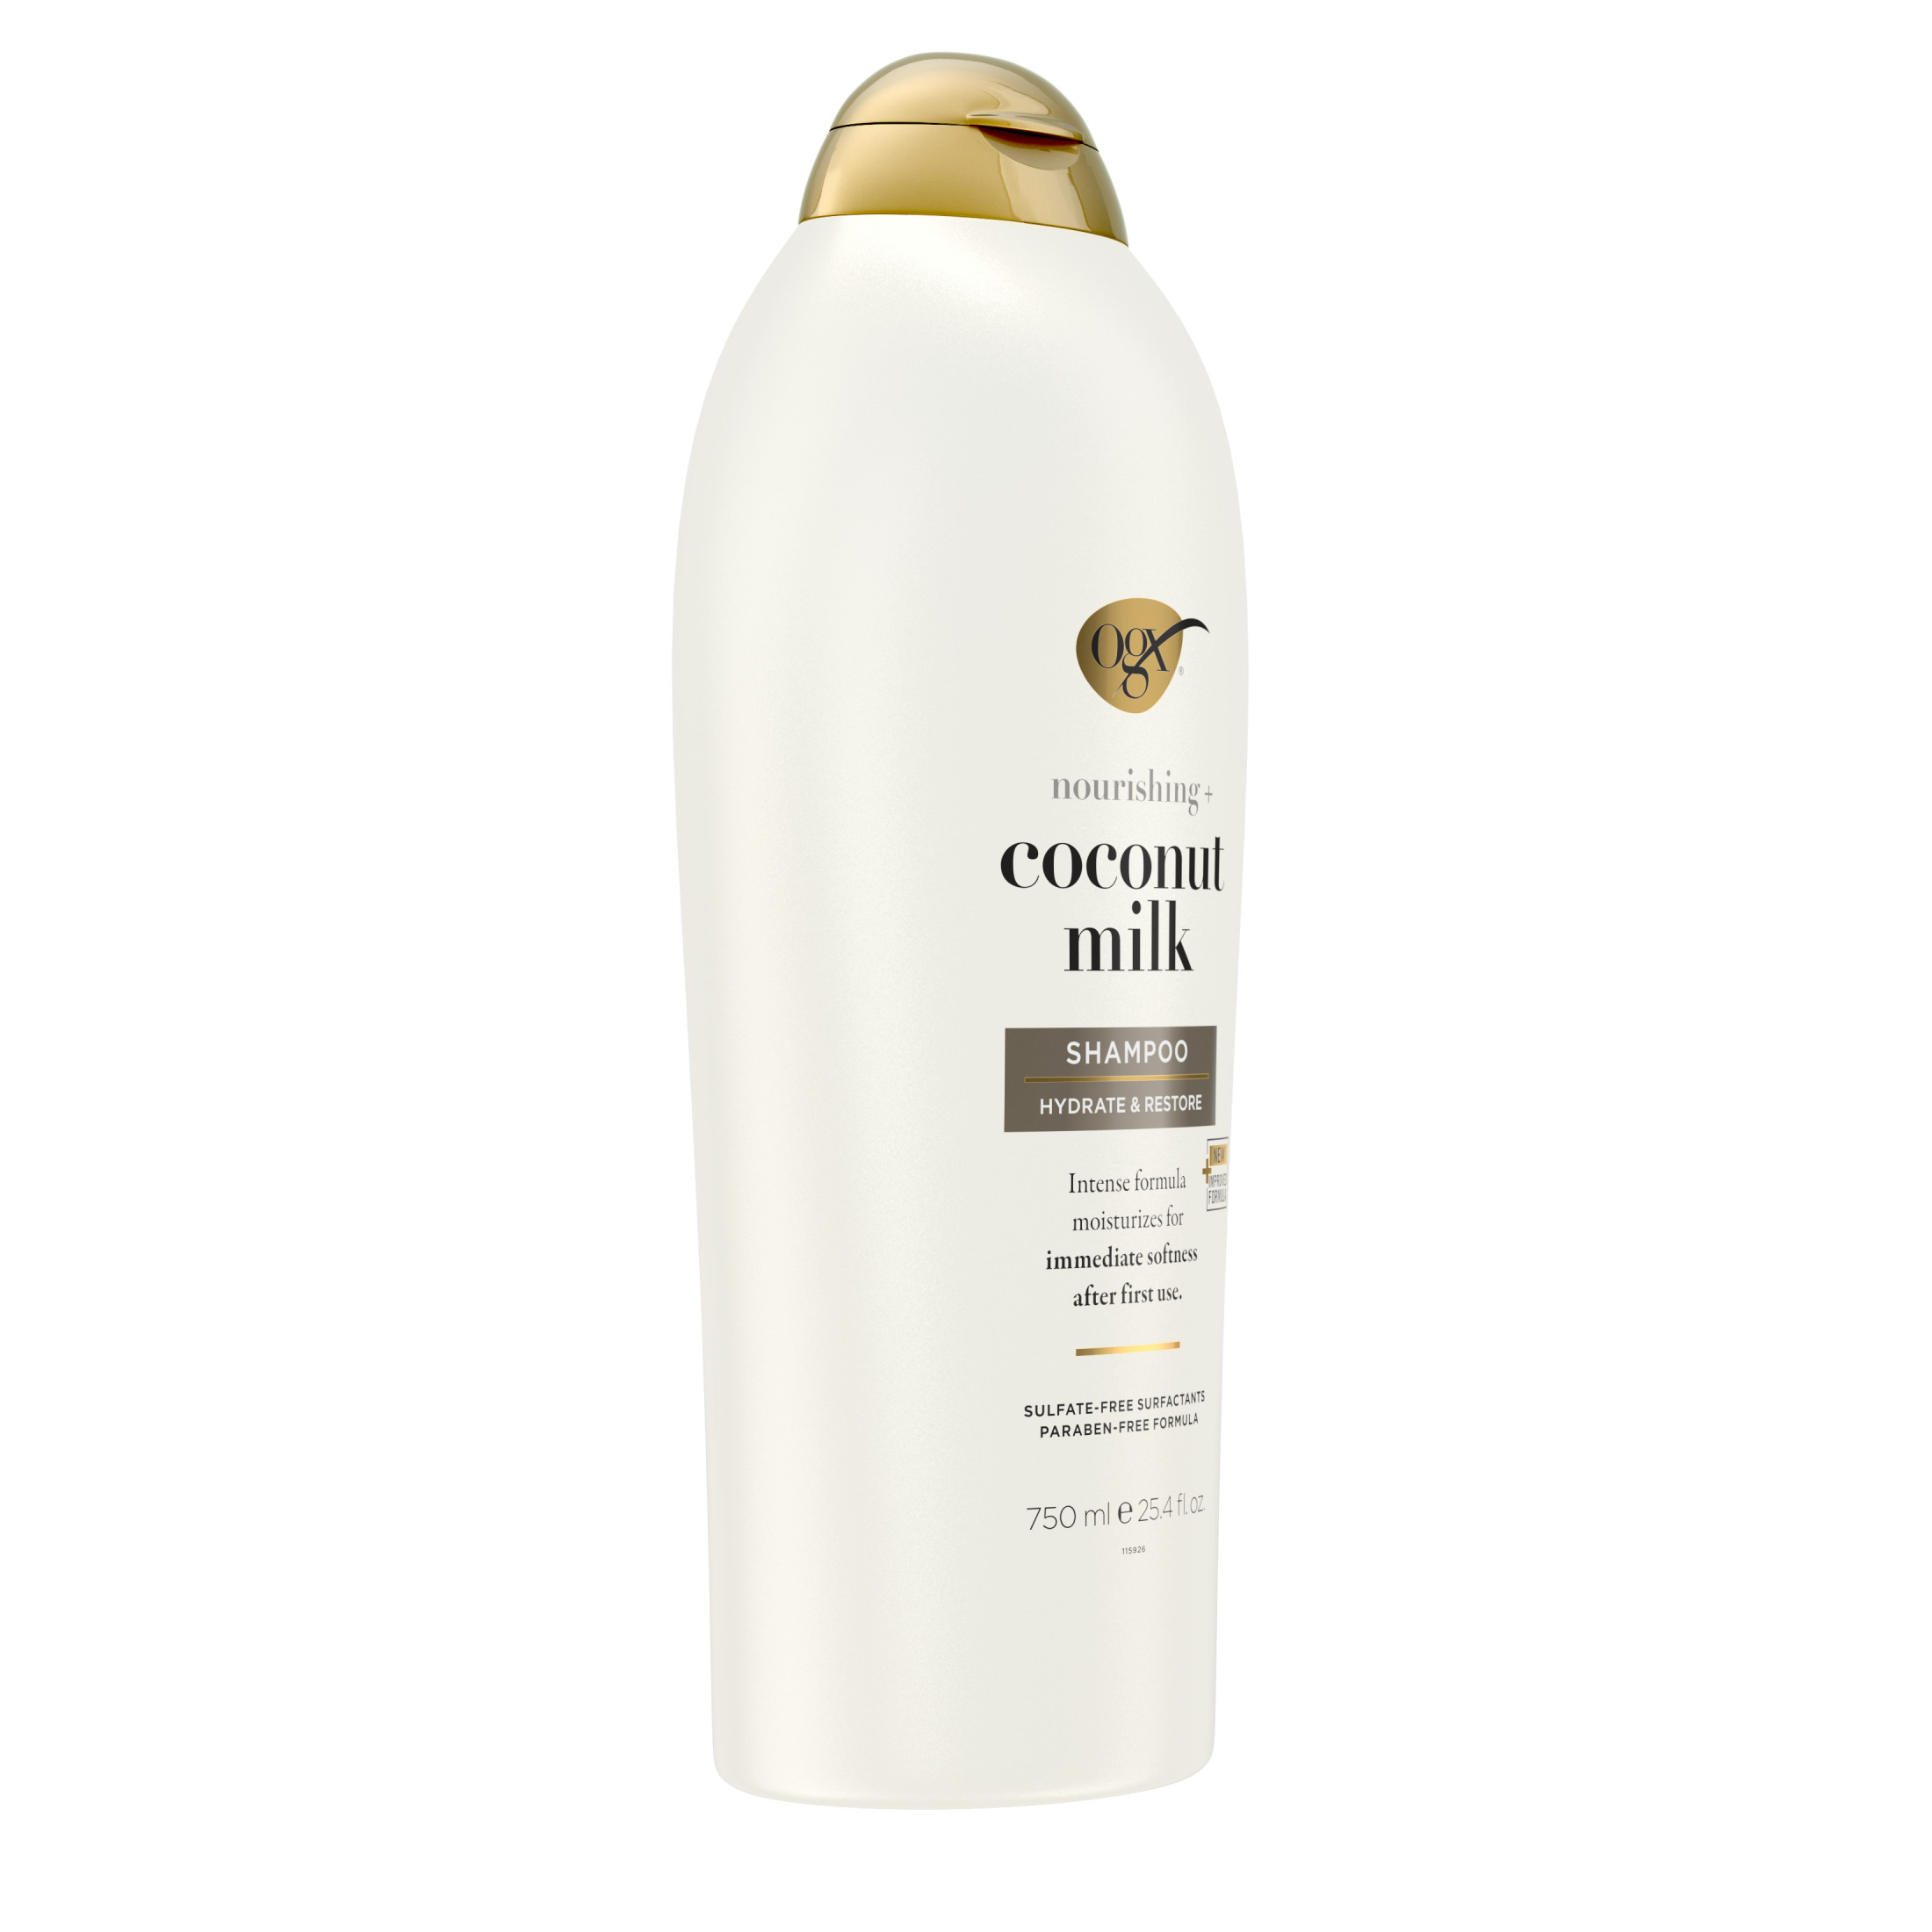 OGX Nourishing + Coconut Milk Moisturizing Daily Shampoo with Egg White Protein, 25.4 fl oz - image 5 of 10